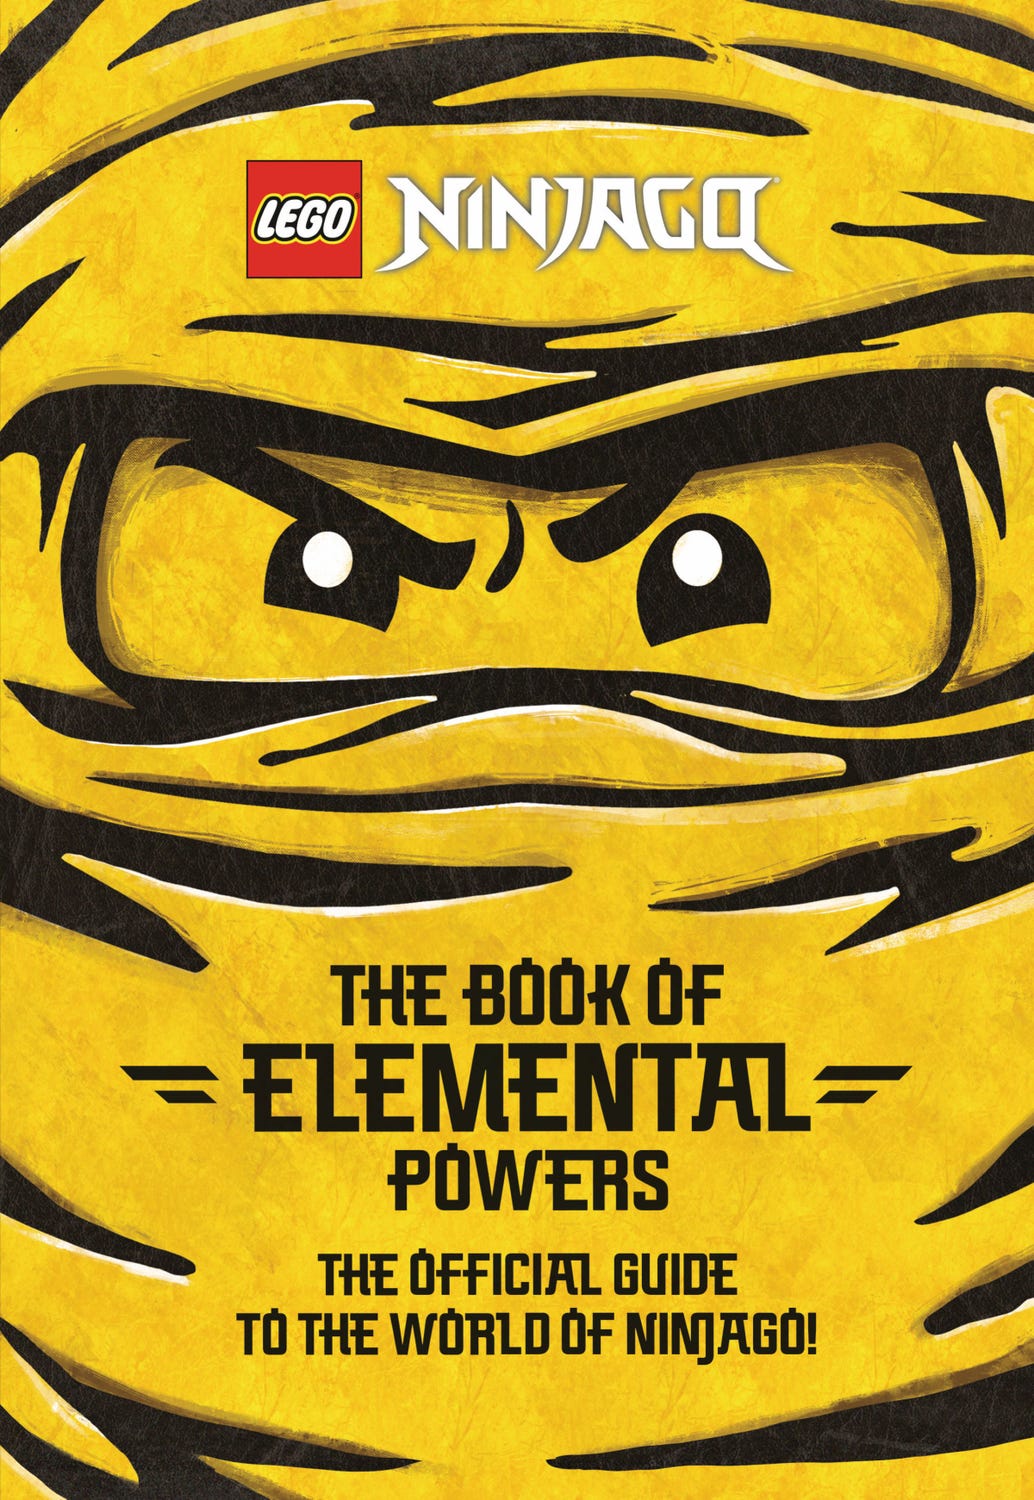 Book of Elemental Powers 5007471, NINJAGO®